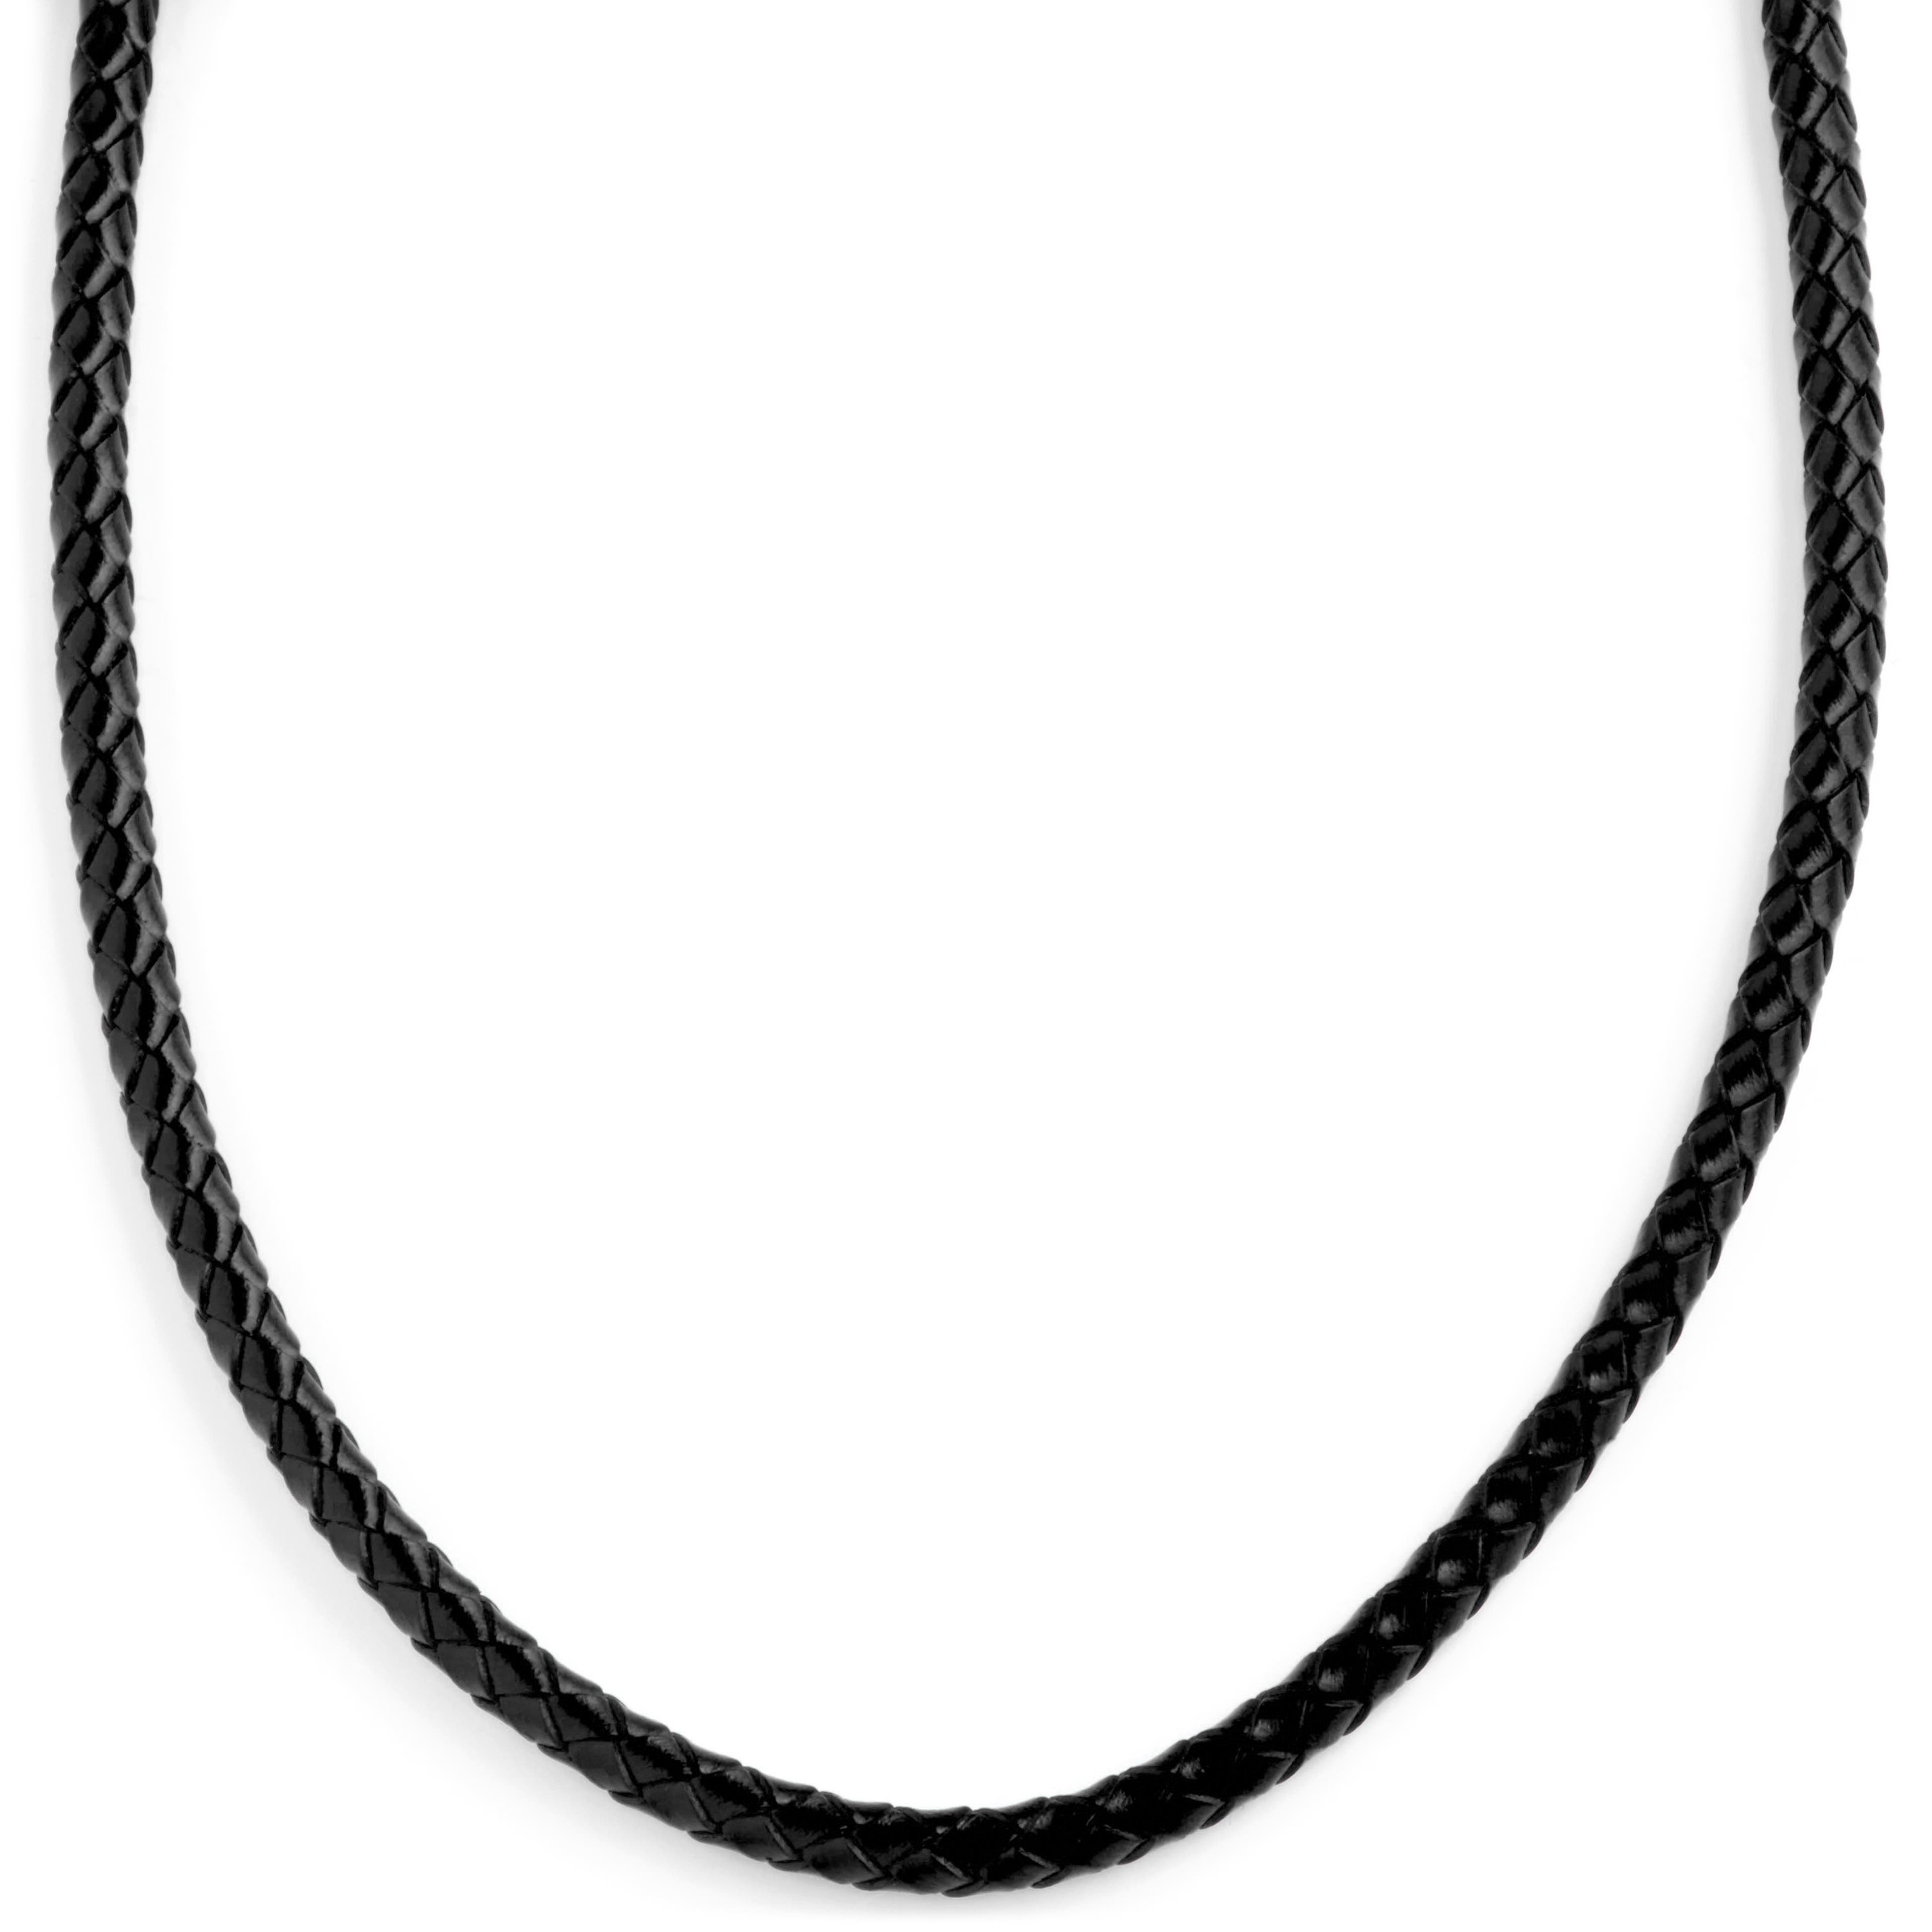 5mm Černý zaplétaný kožený náhrdelník